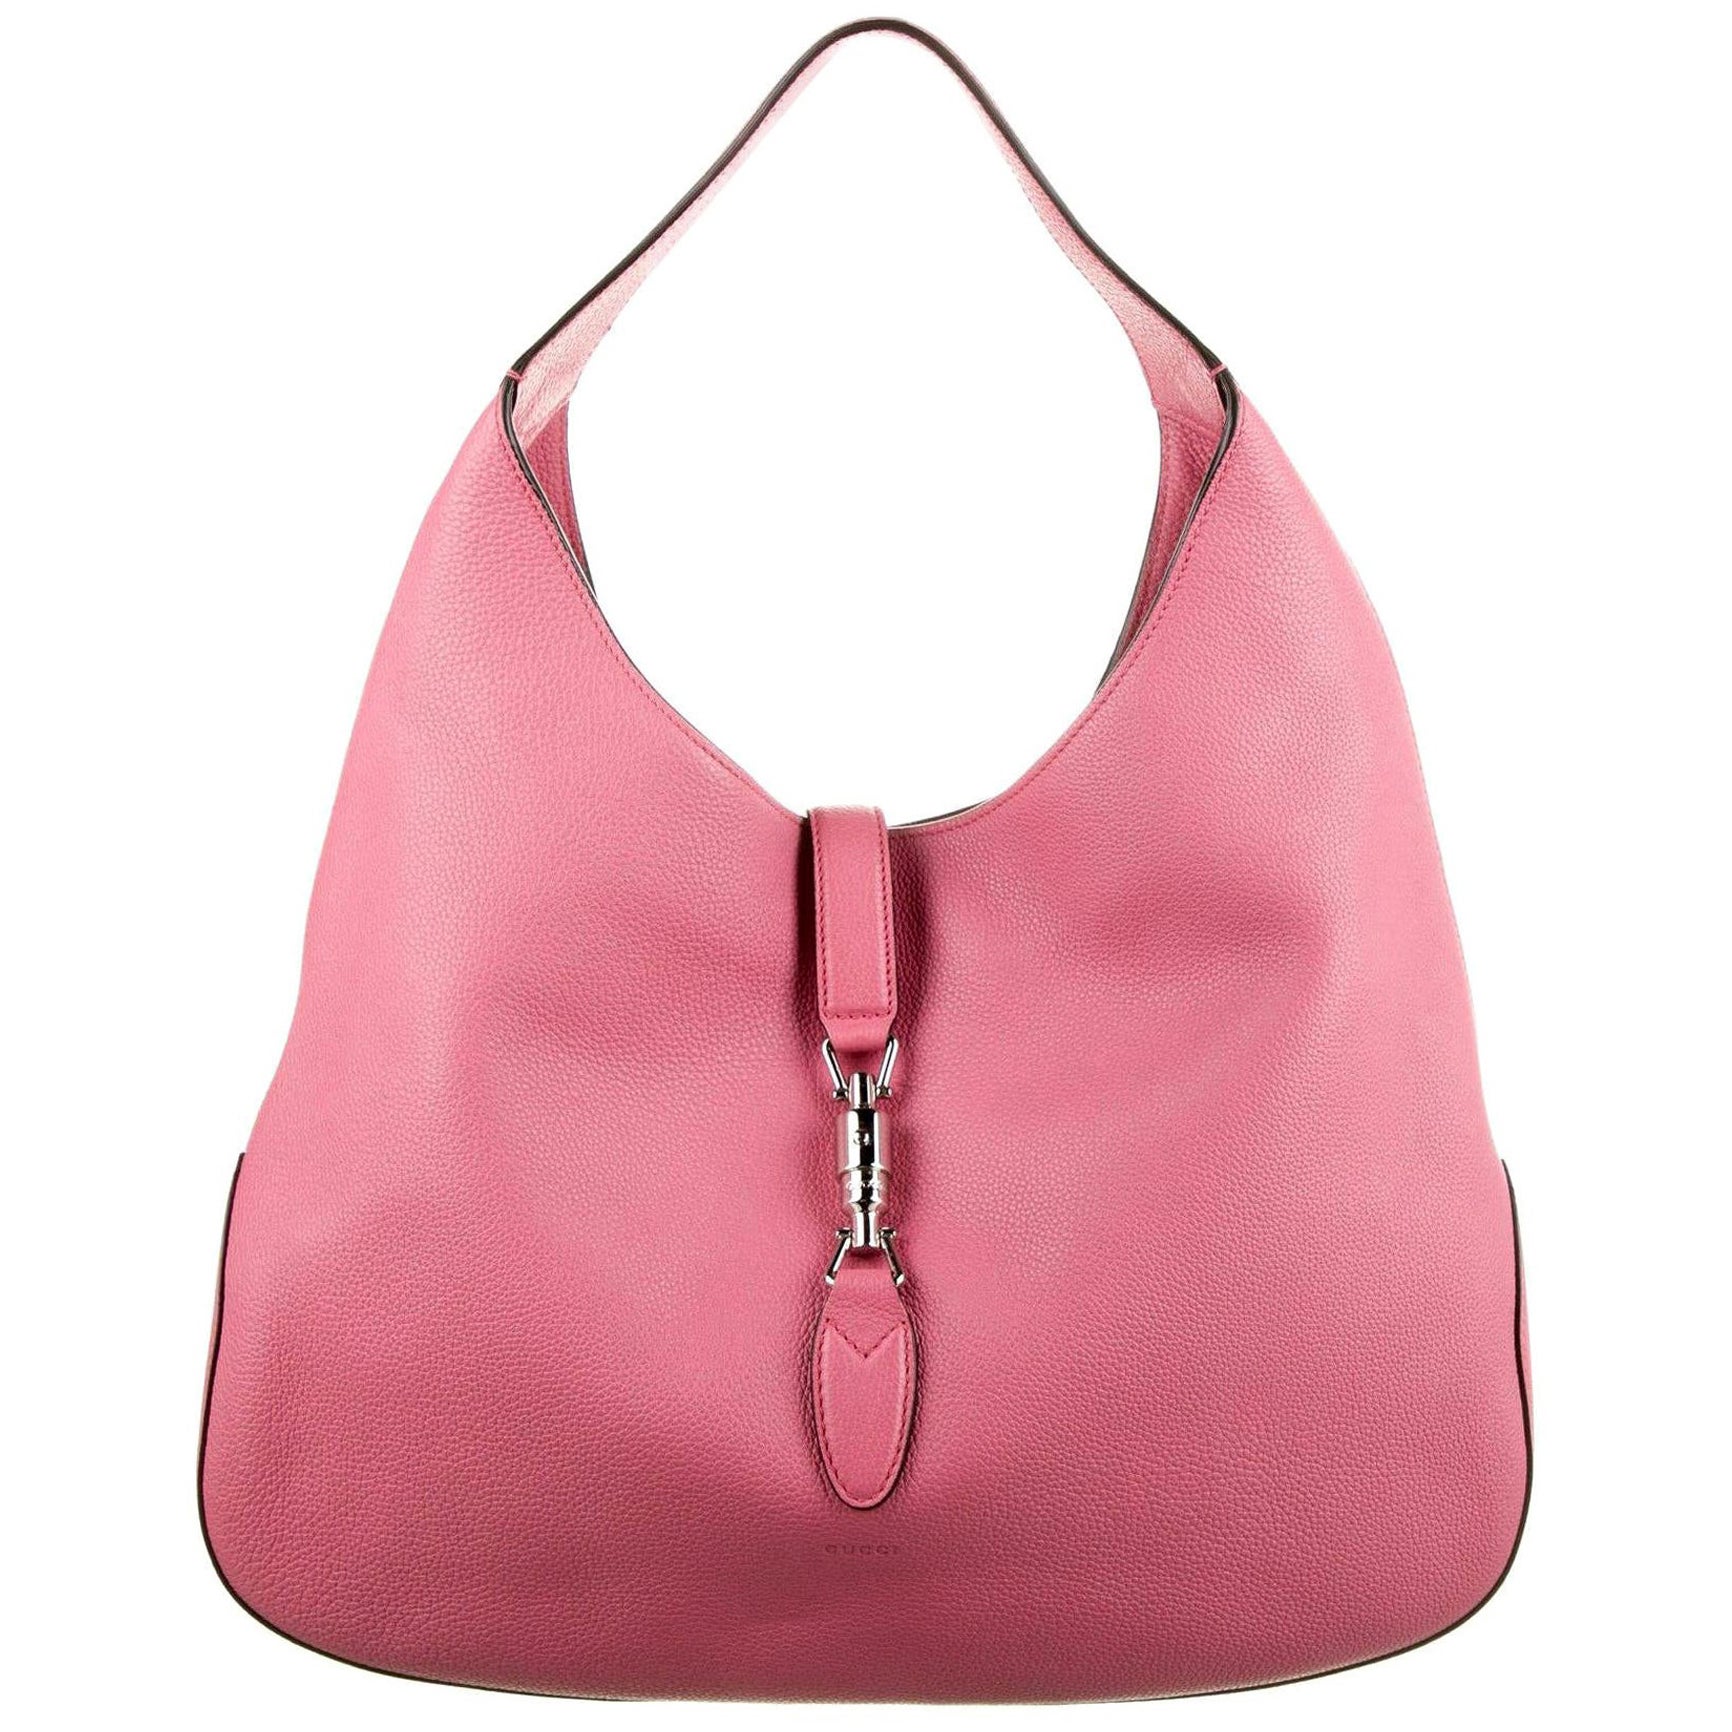 Nouveauté Gucci extra large sac Jackie O Gaga en cuir rose 3595 $ automne 2014